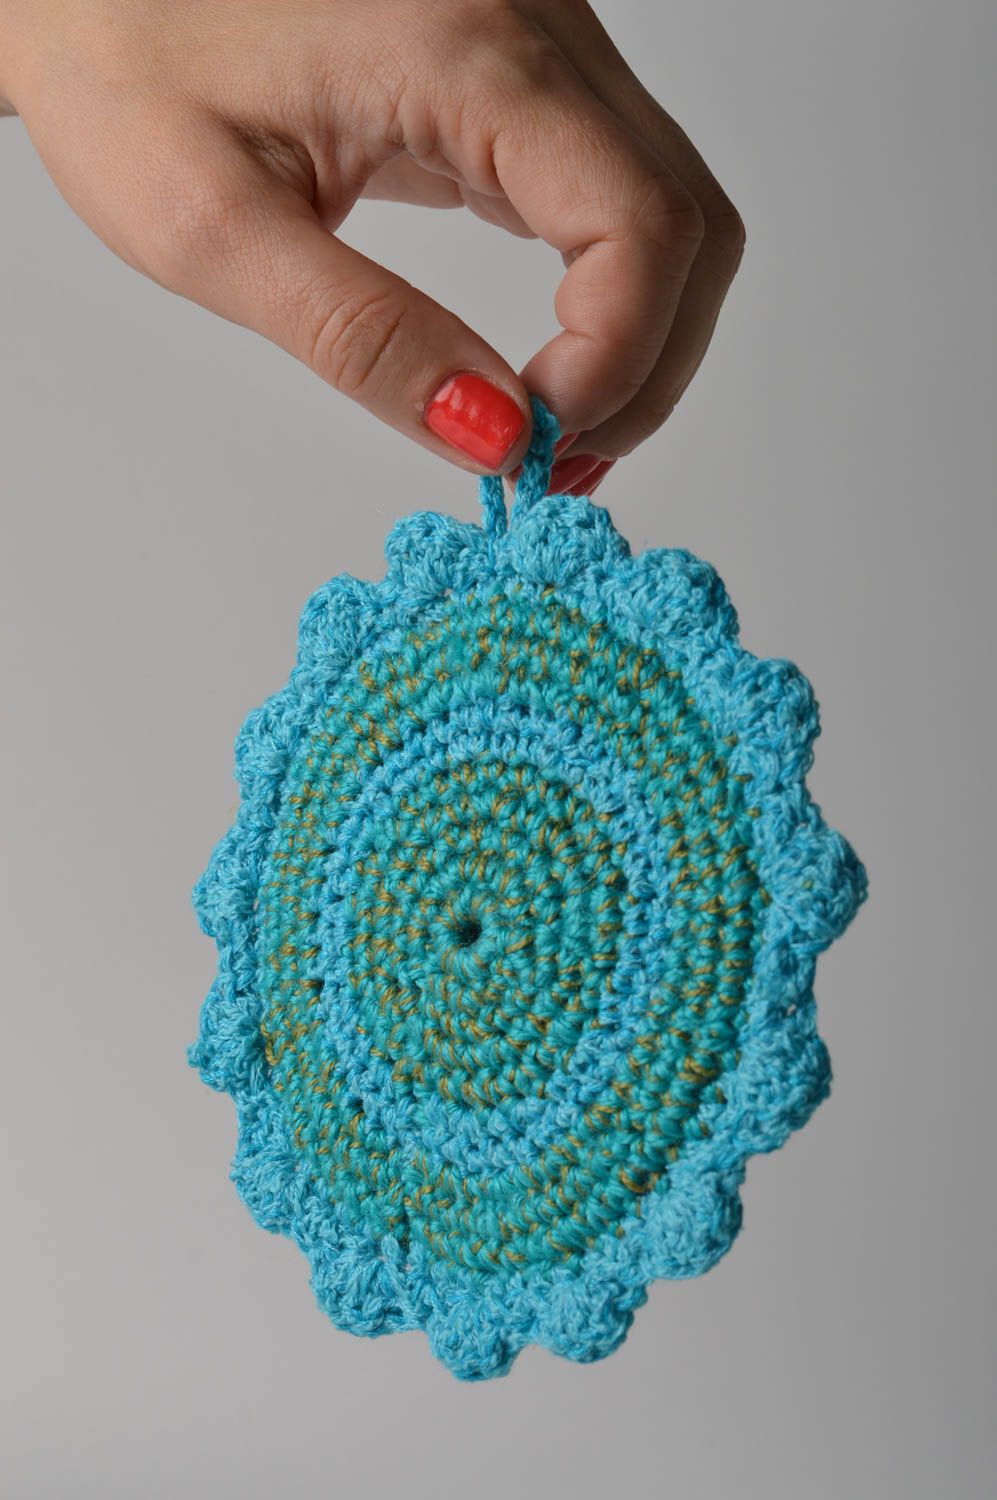 Beautiful handmade crochet potholder home textiles kitchen design gift ideas photo 2